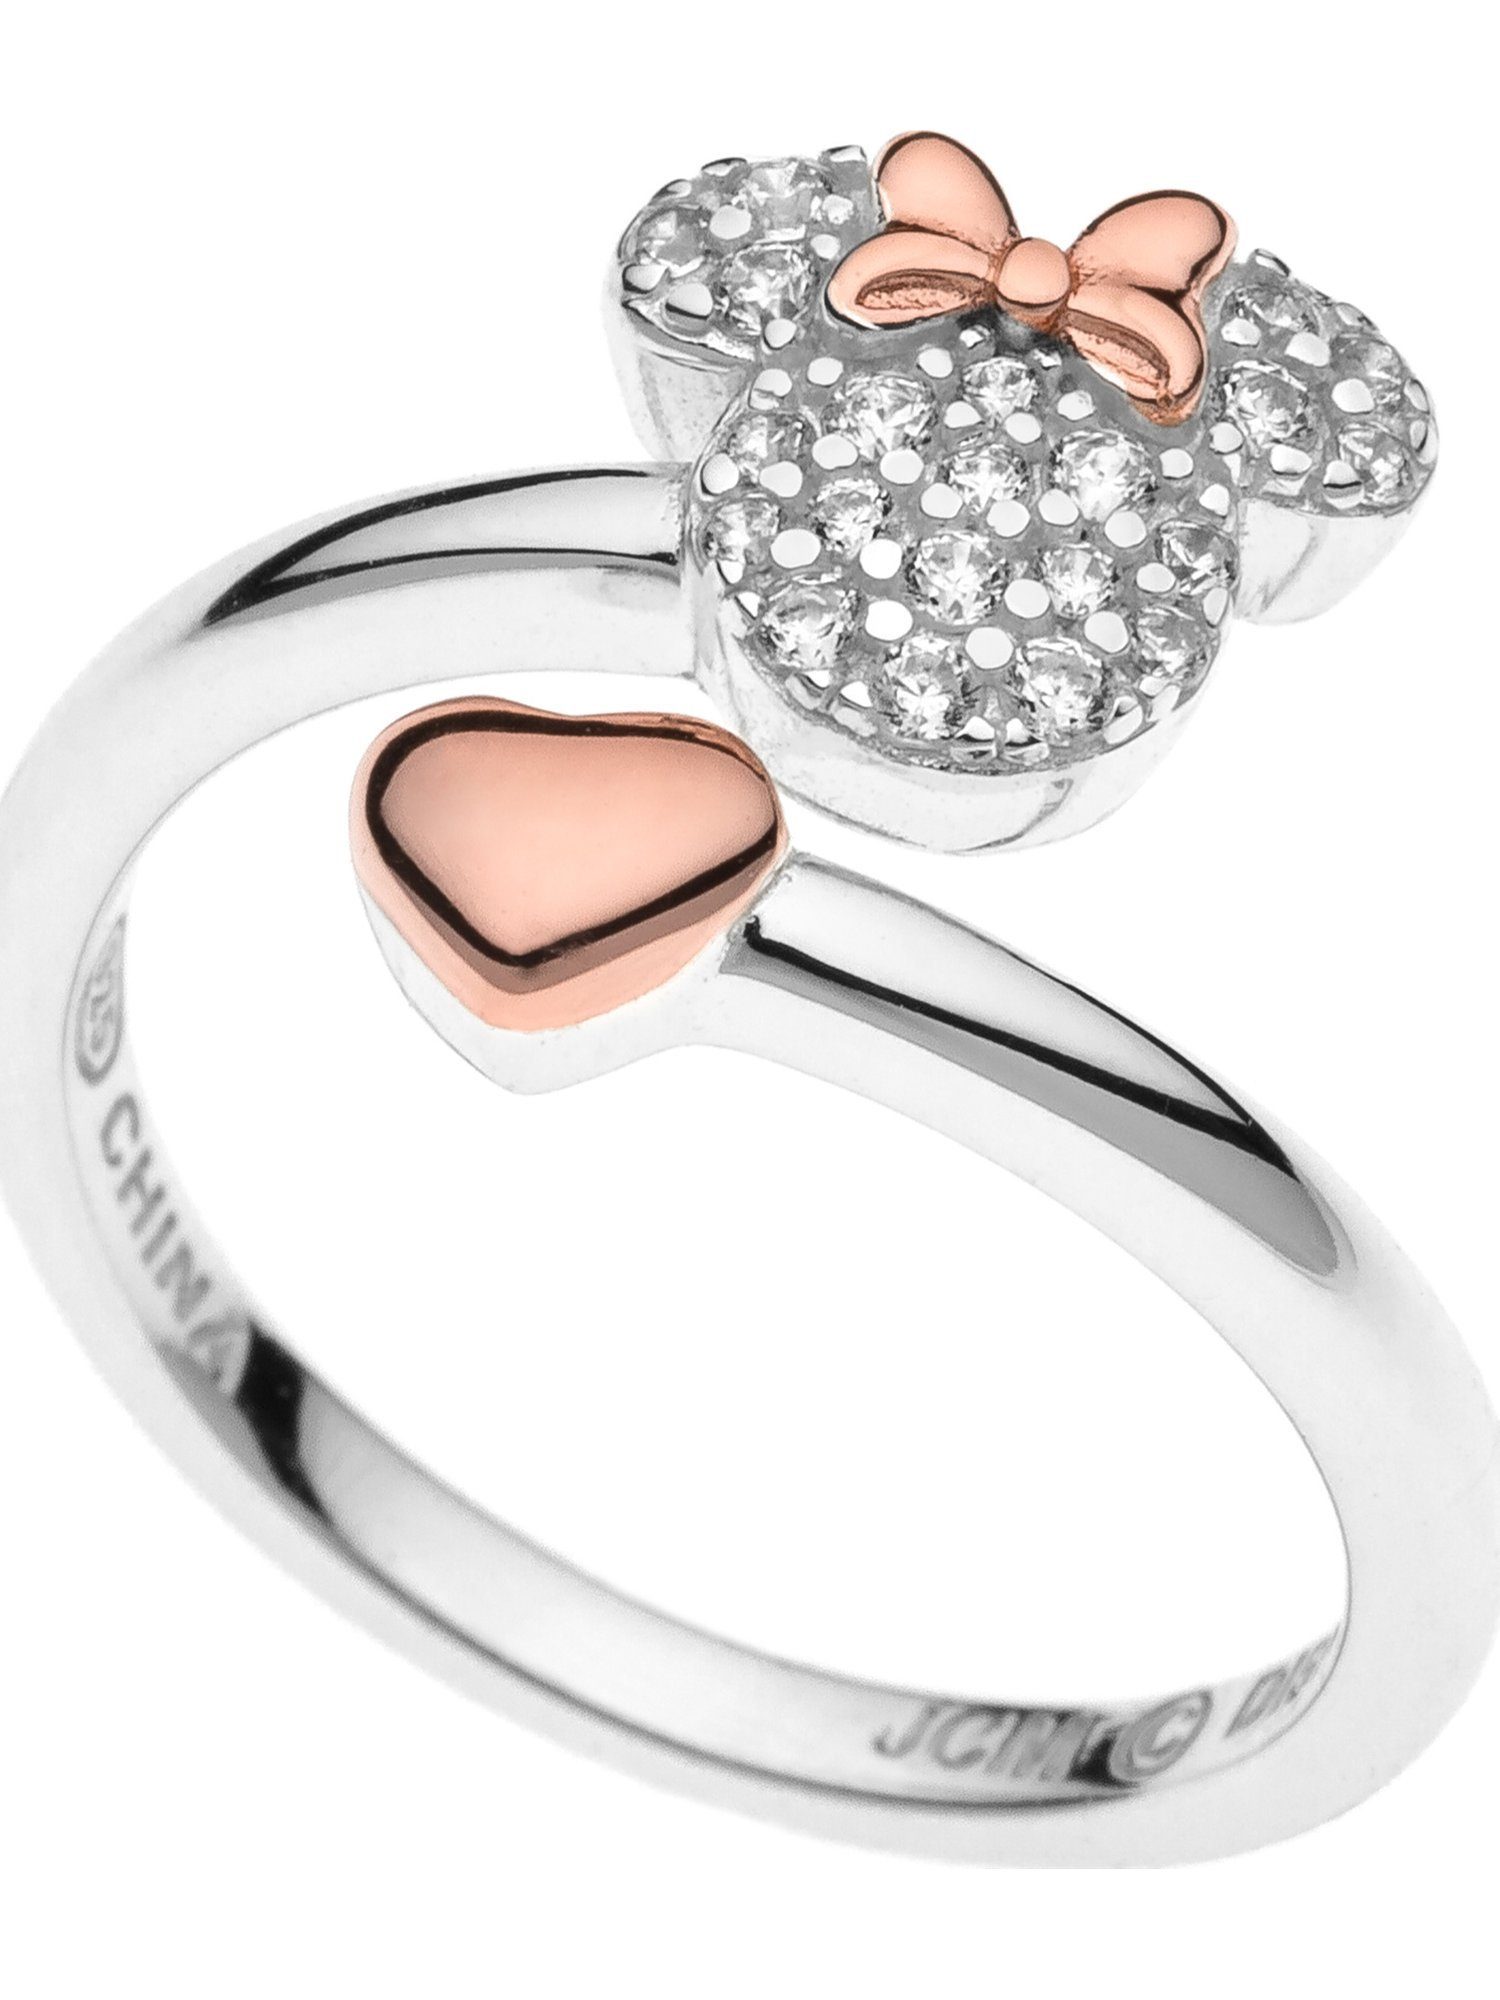 Kristall, DISNEY Silber Disney Fingerring Kristall Jewelry Mädchen-Kinderring 925er